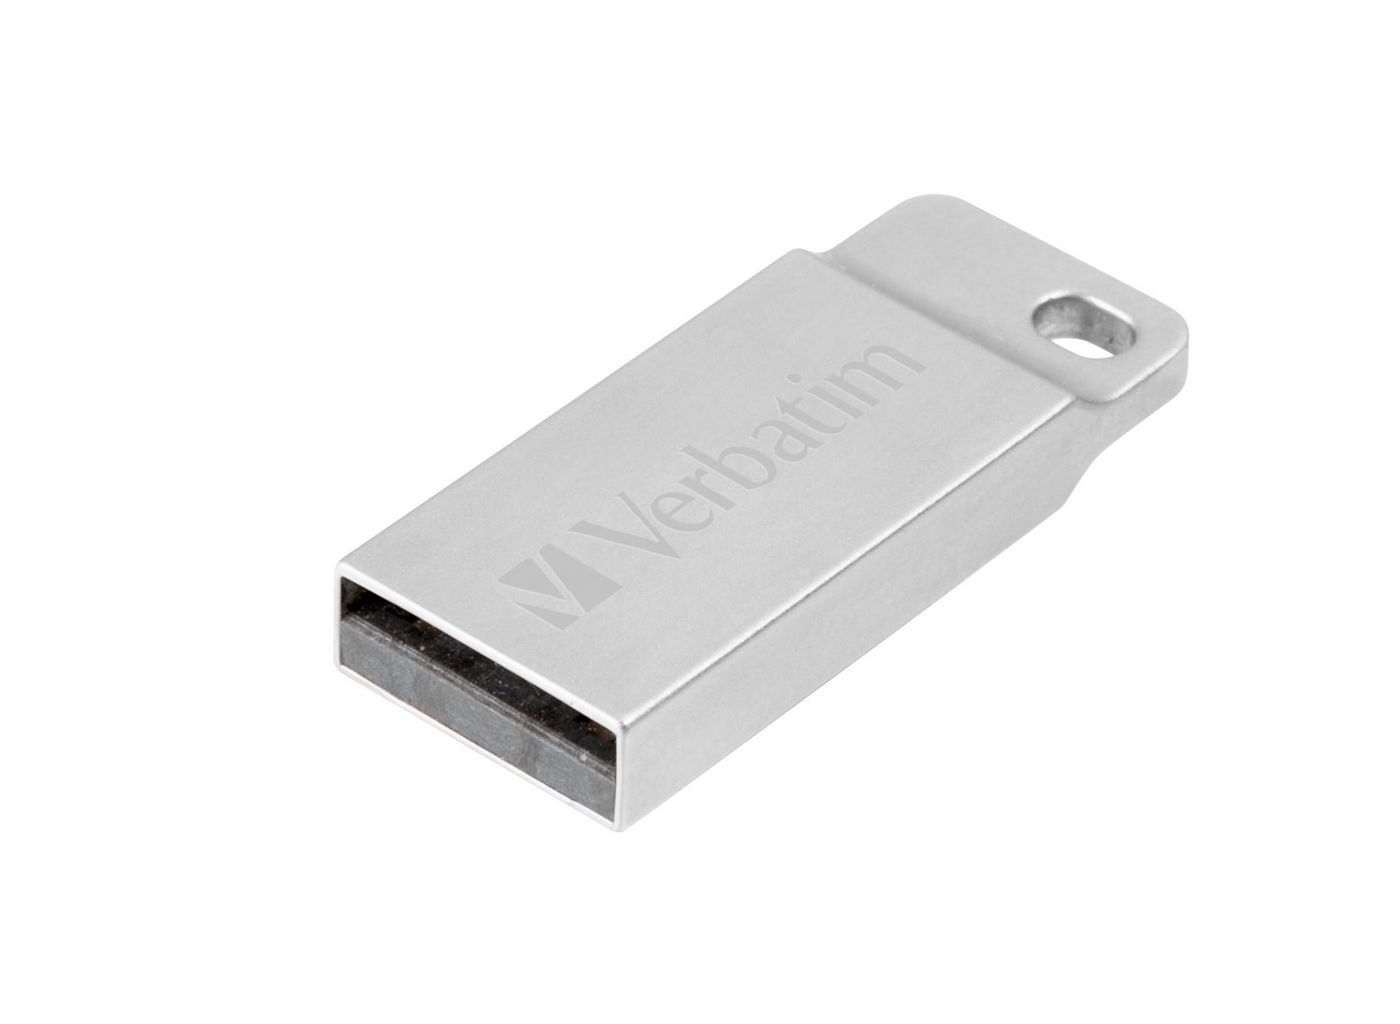 VERBATIM USB DRIVE 2.0